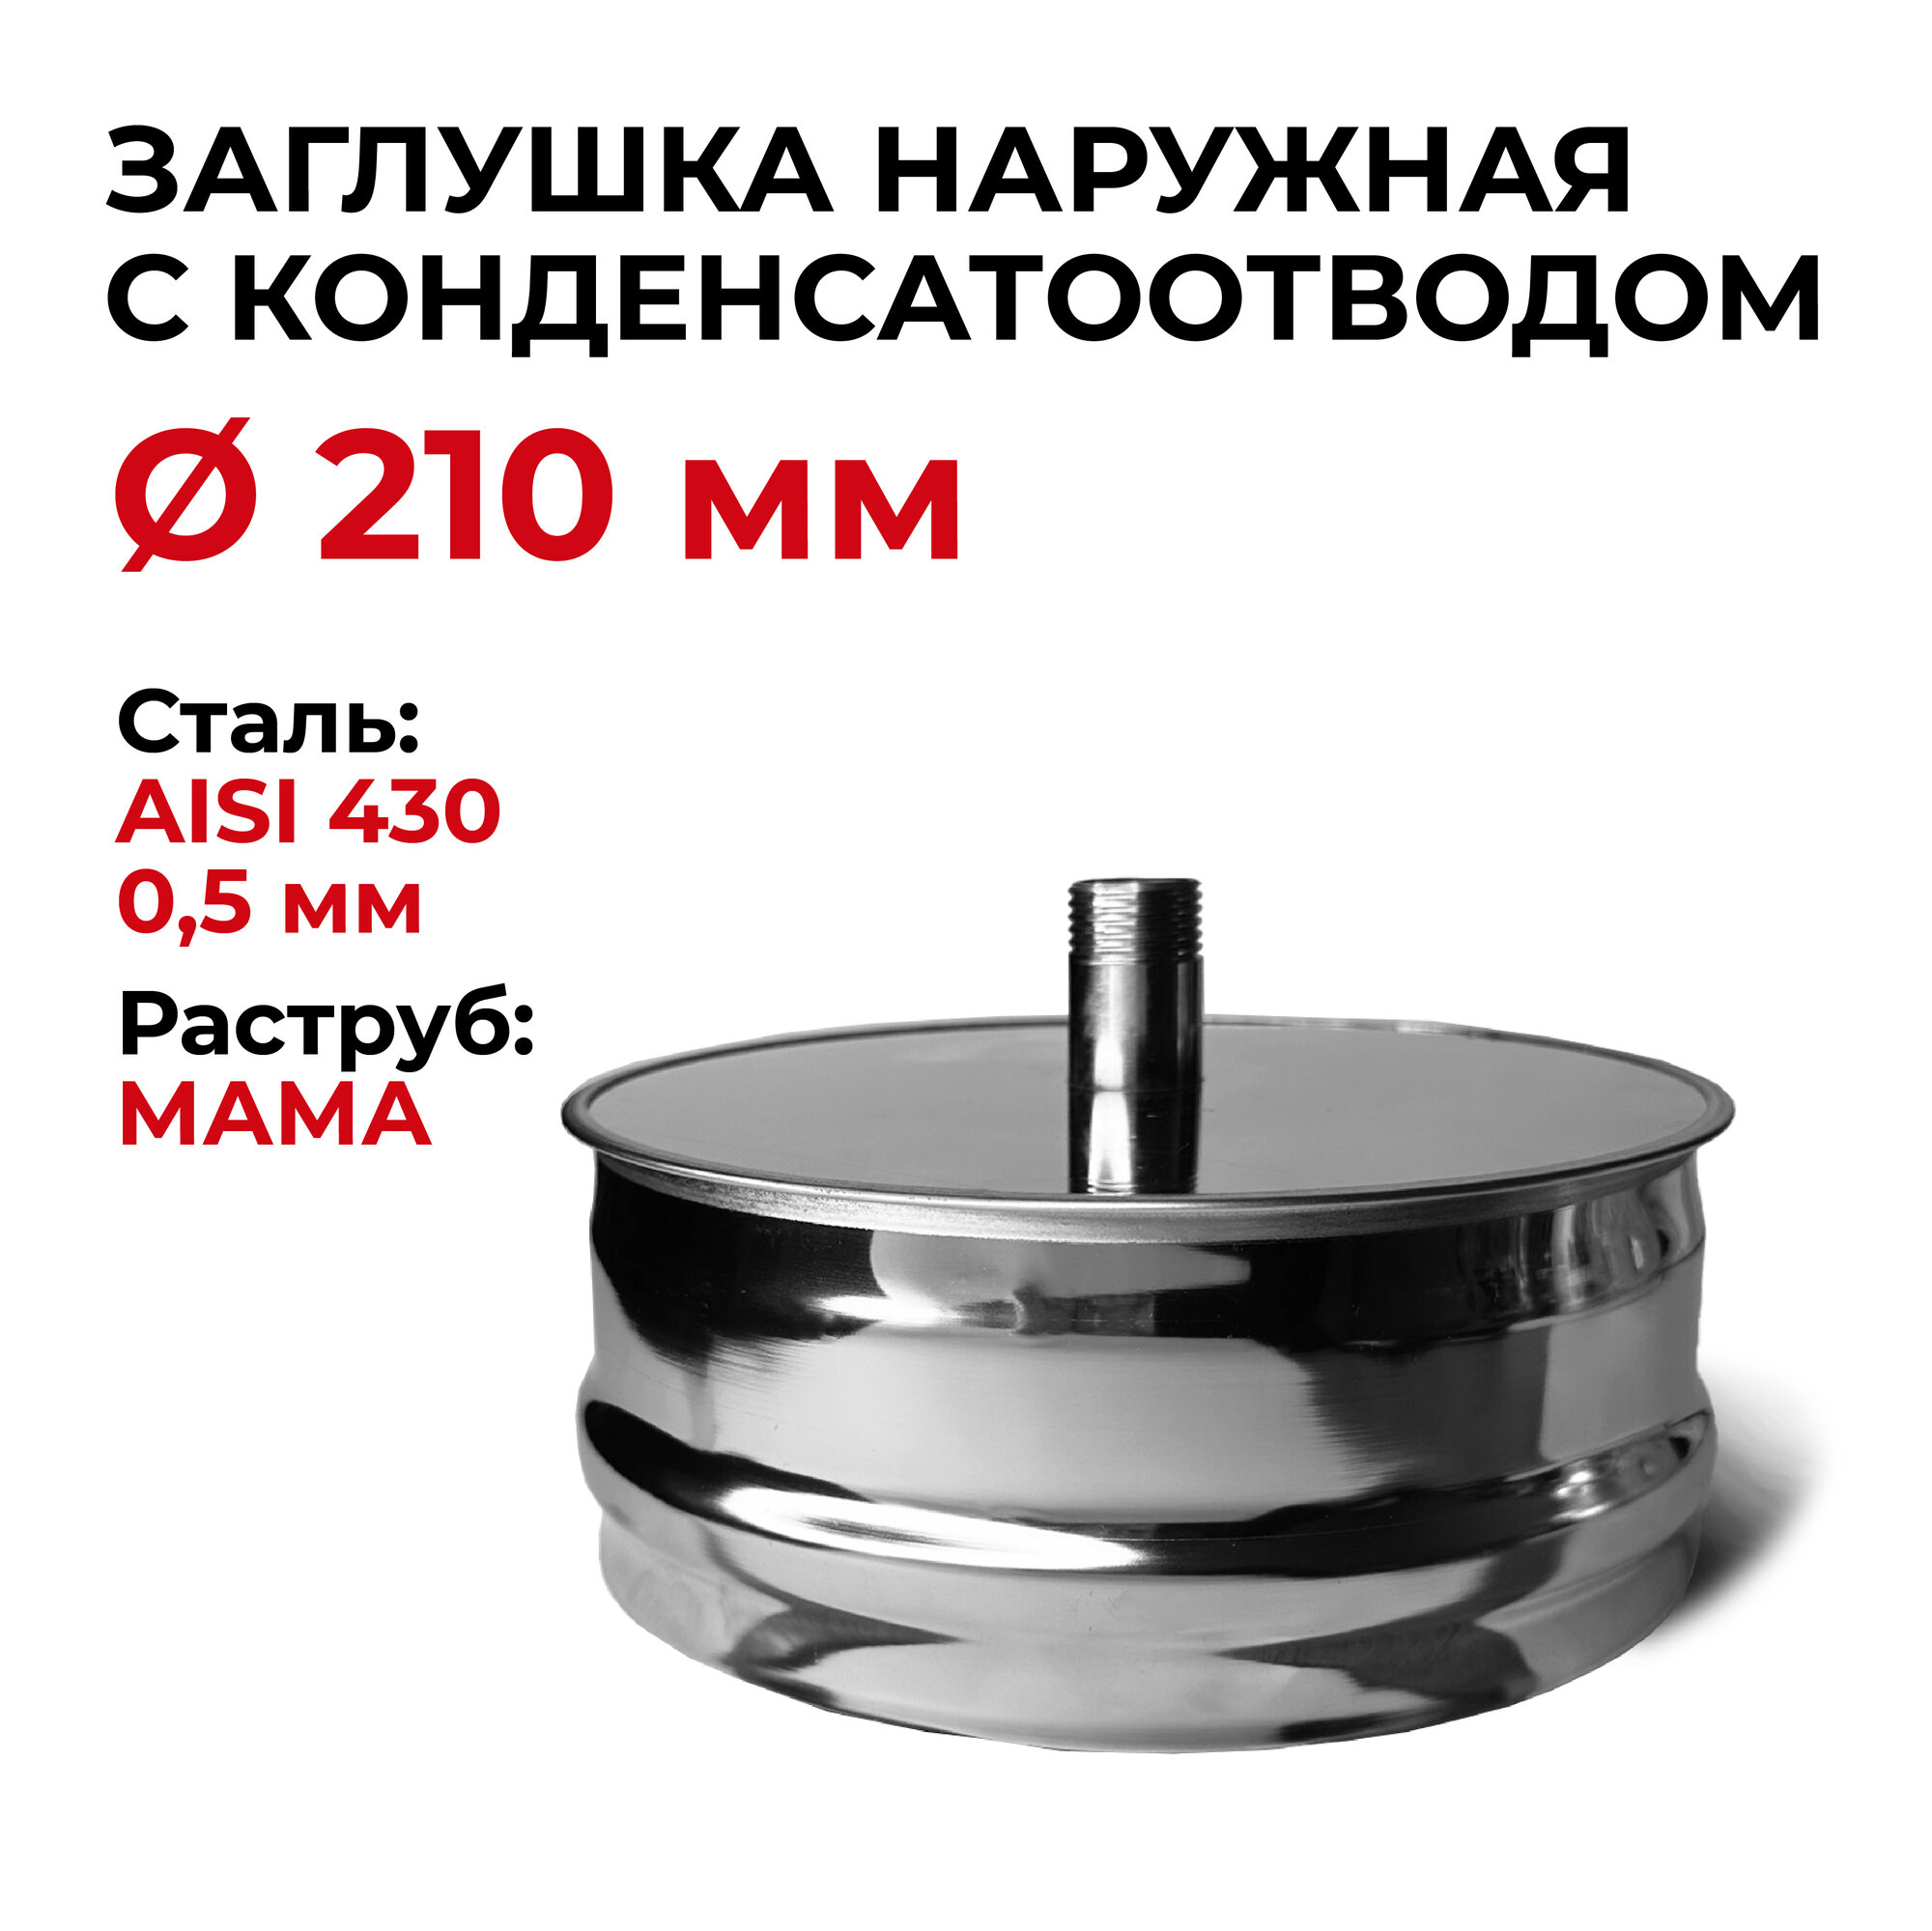 Заглушка с конденсатоотводом 1/2 наружная мама D 210 мм 